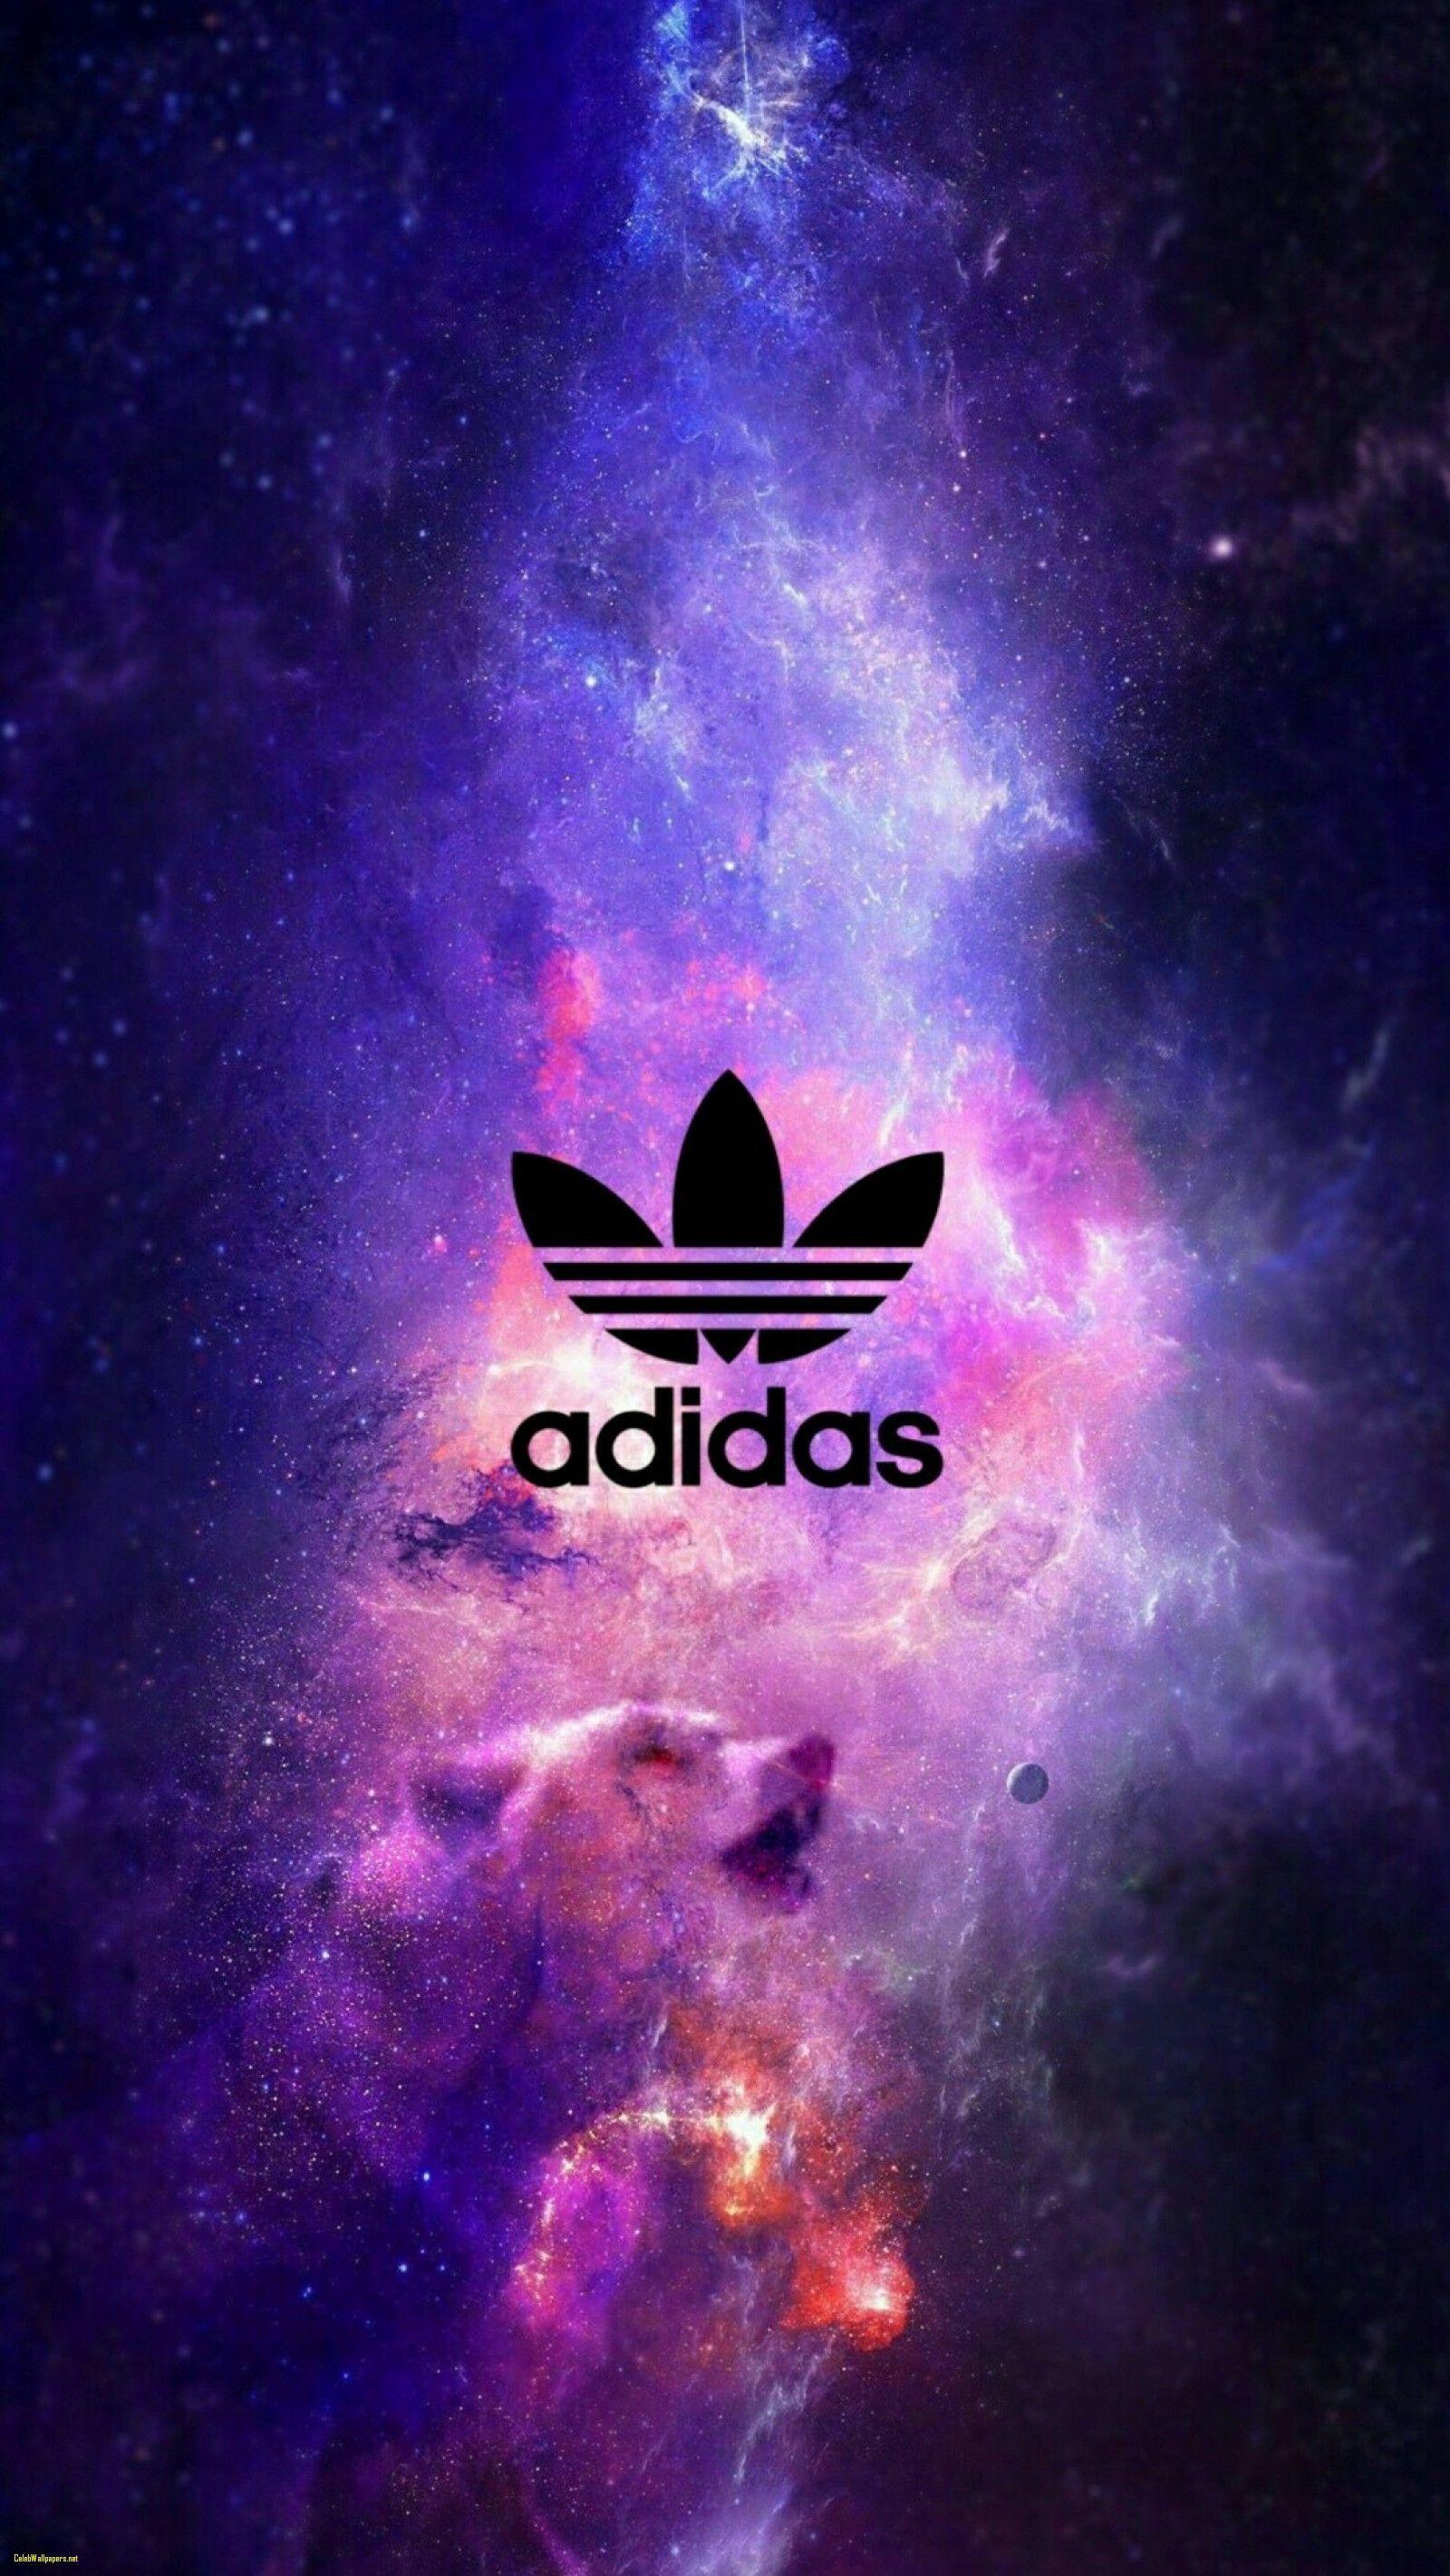 Adidas Wallpaper iPhone Image